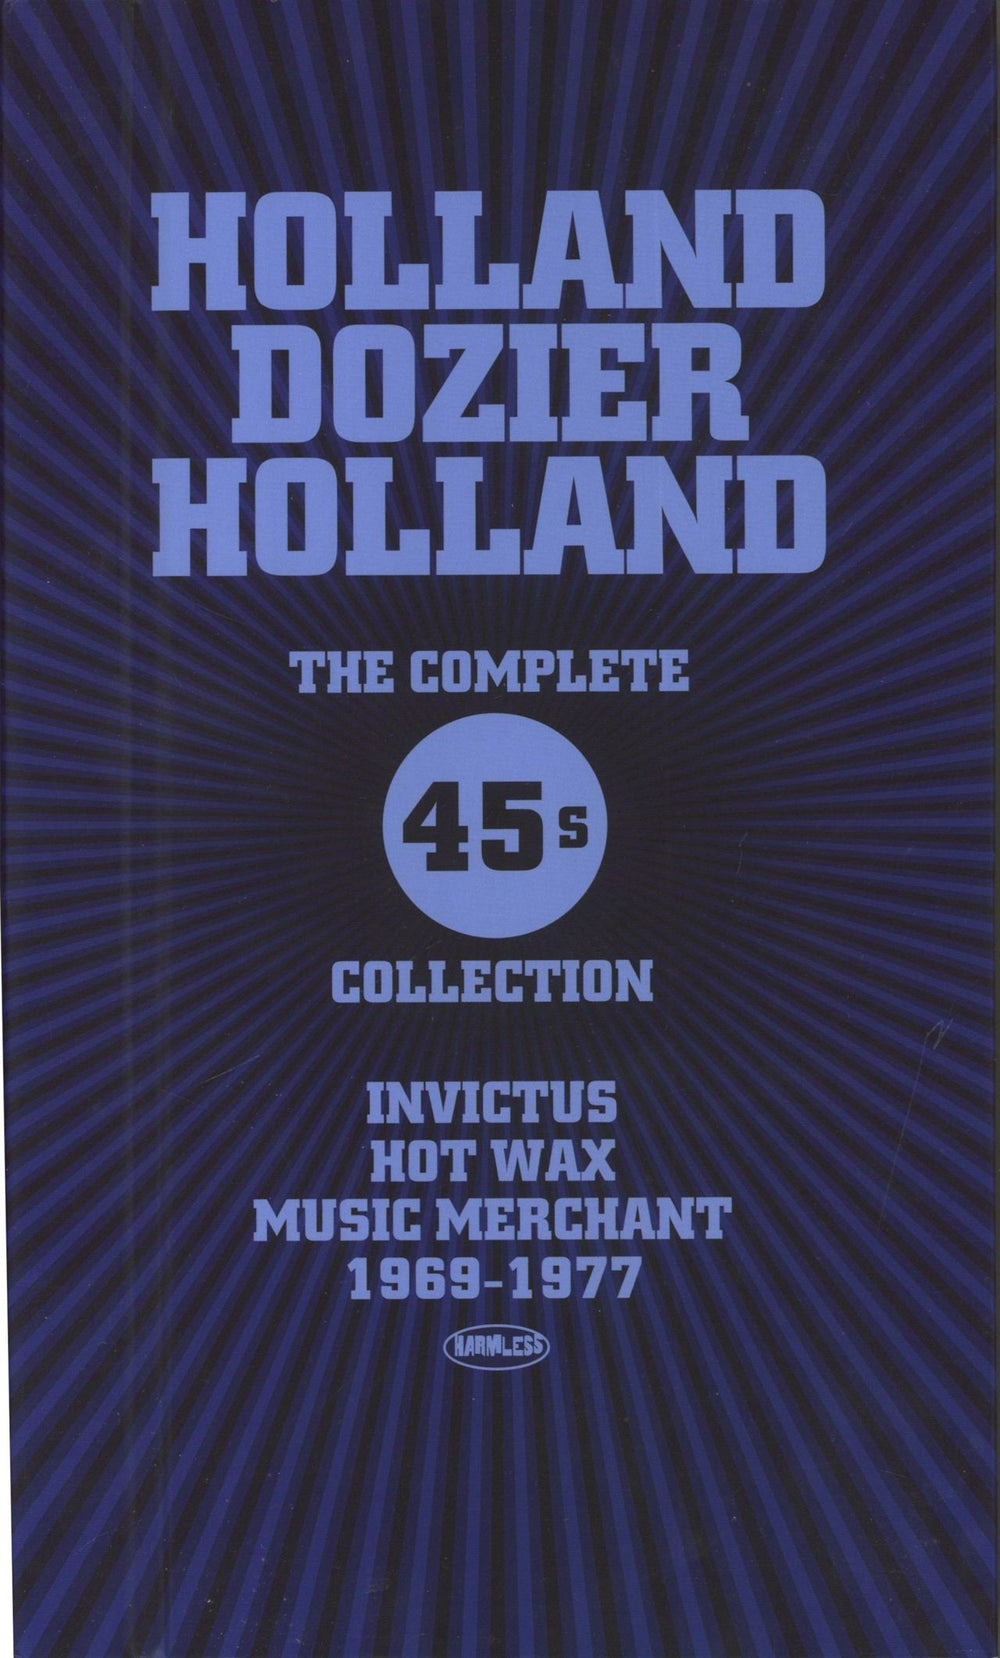 Holland-Dozier The Complete 45s Collection UK CD Album Box Set HURTBOX006